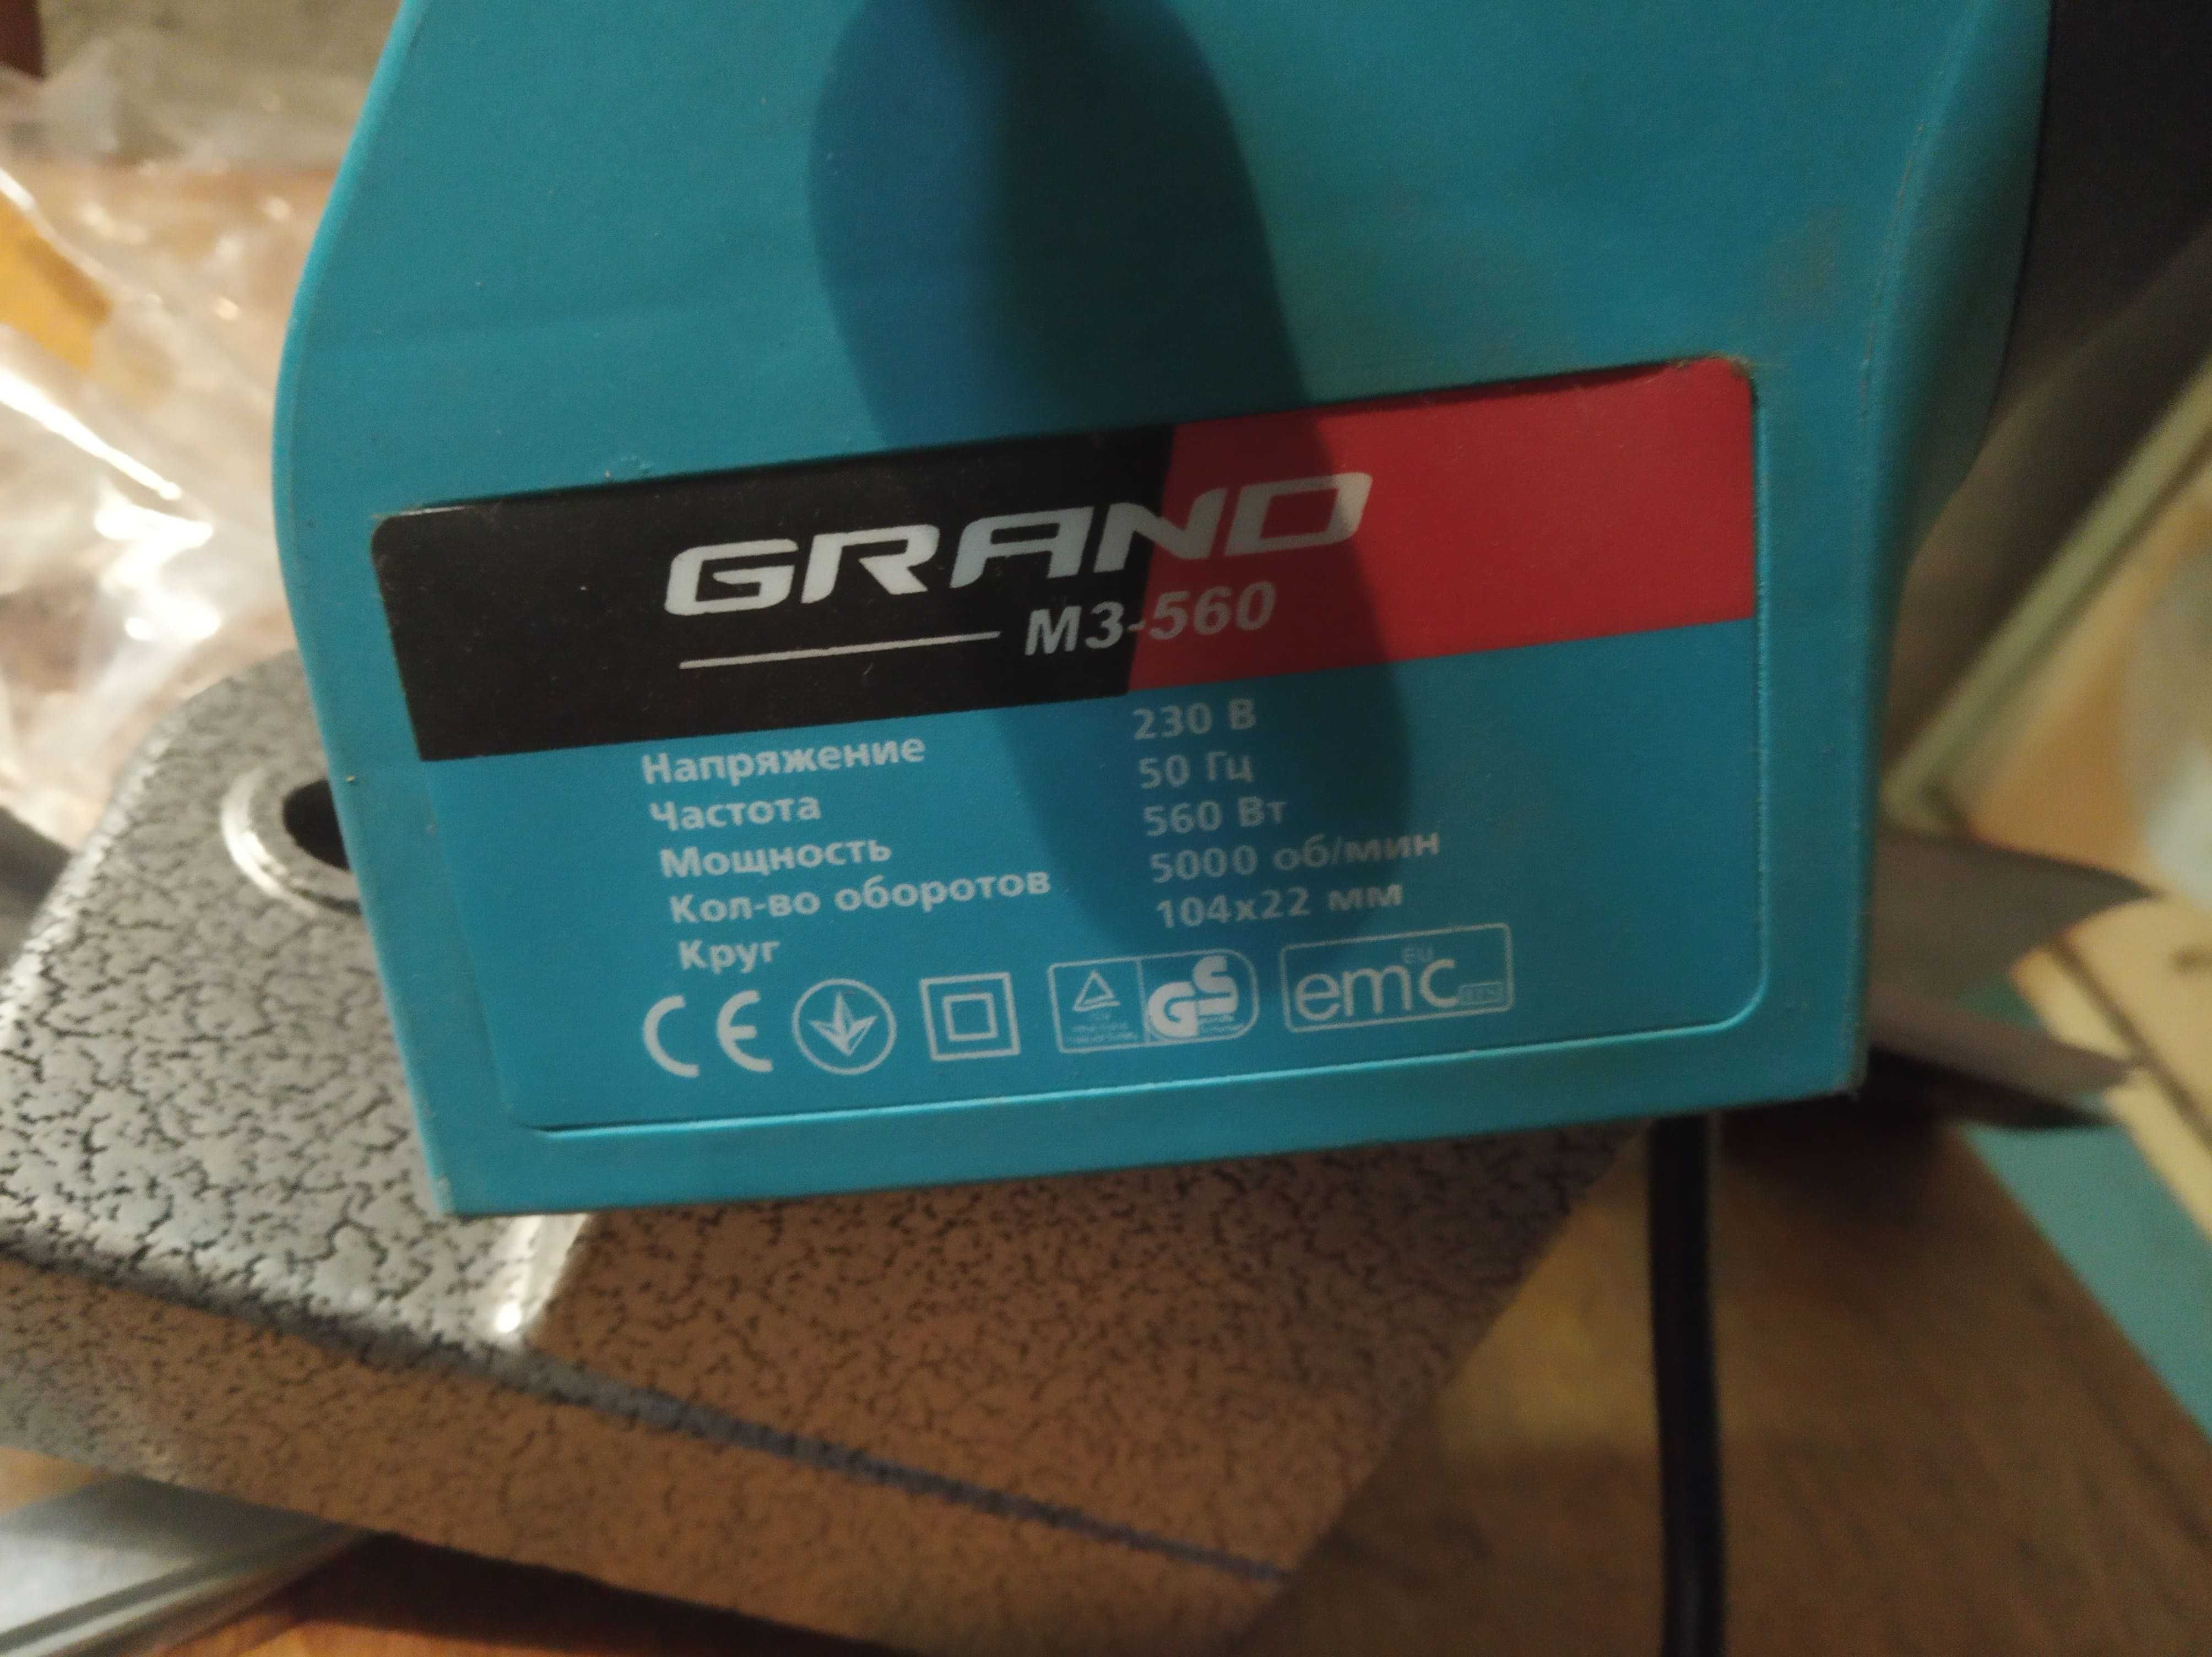 Станок для заточки цепей Grand МЗ-560